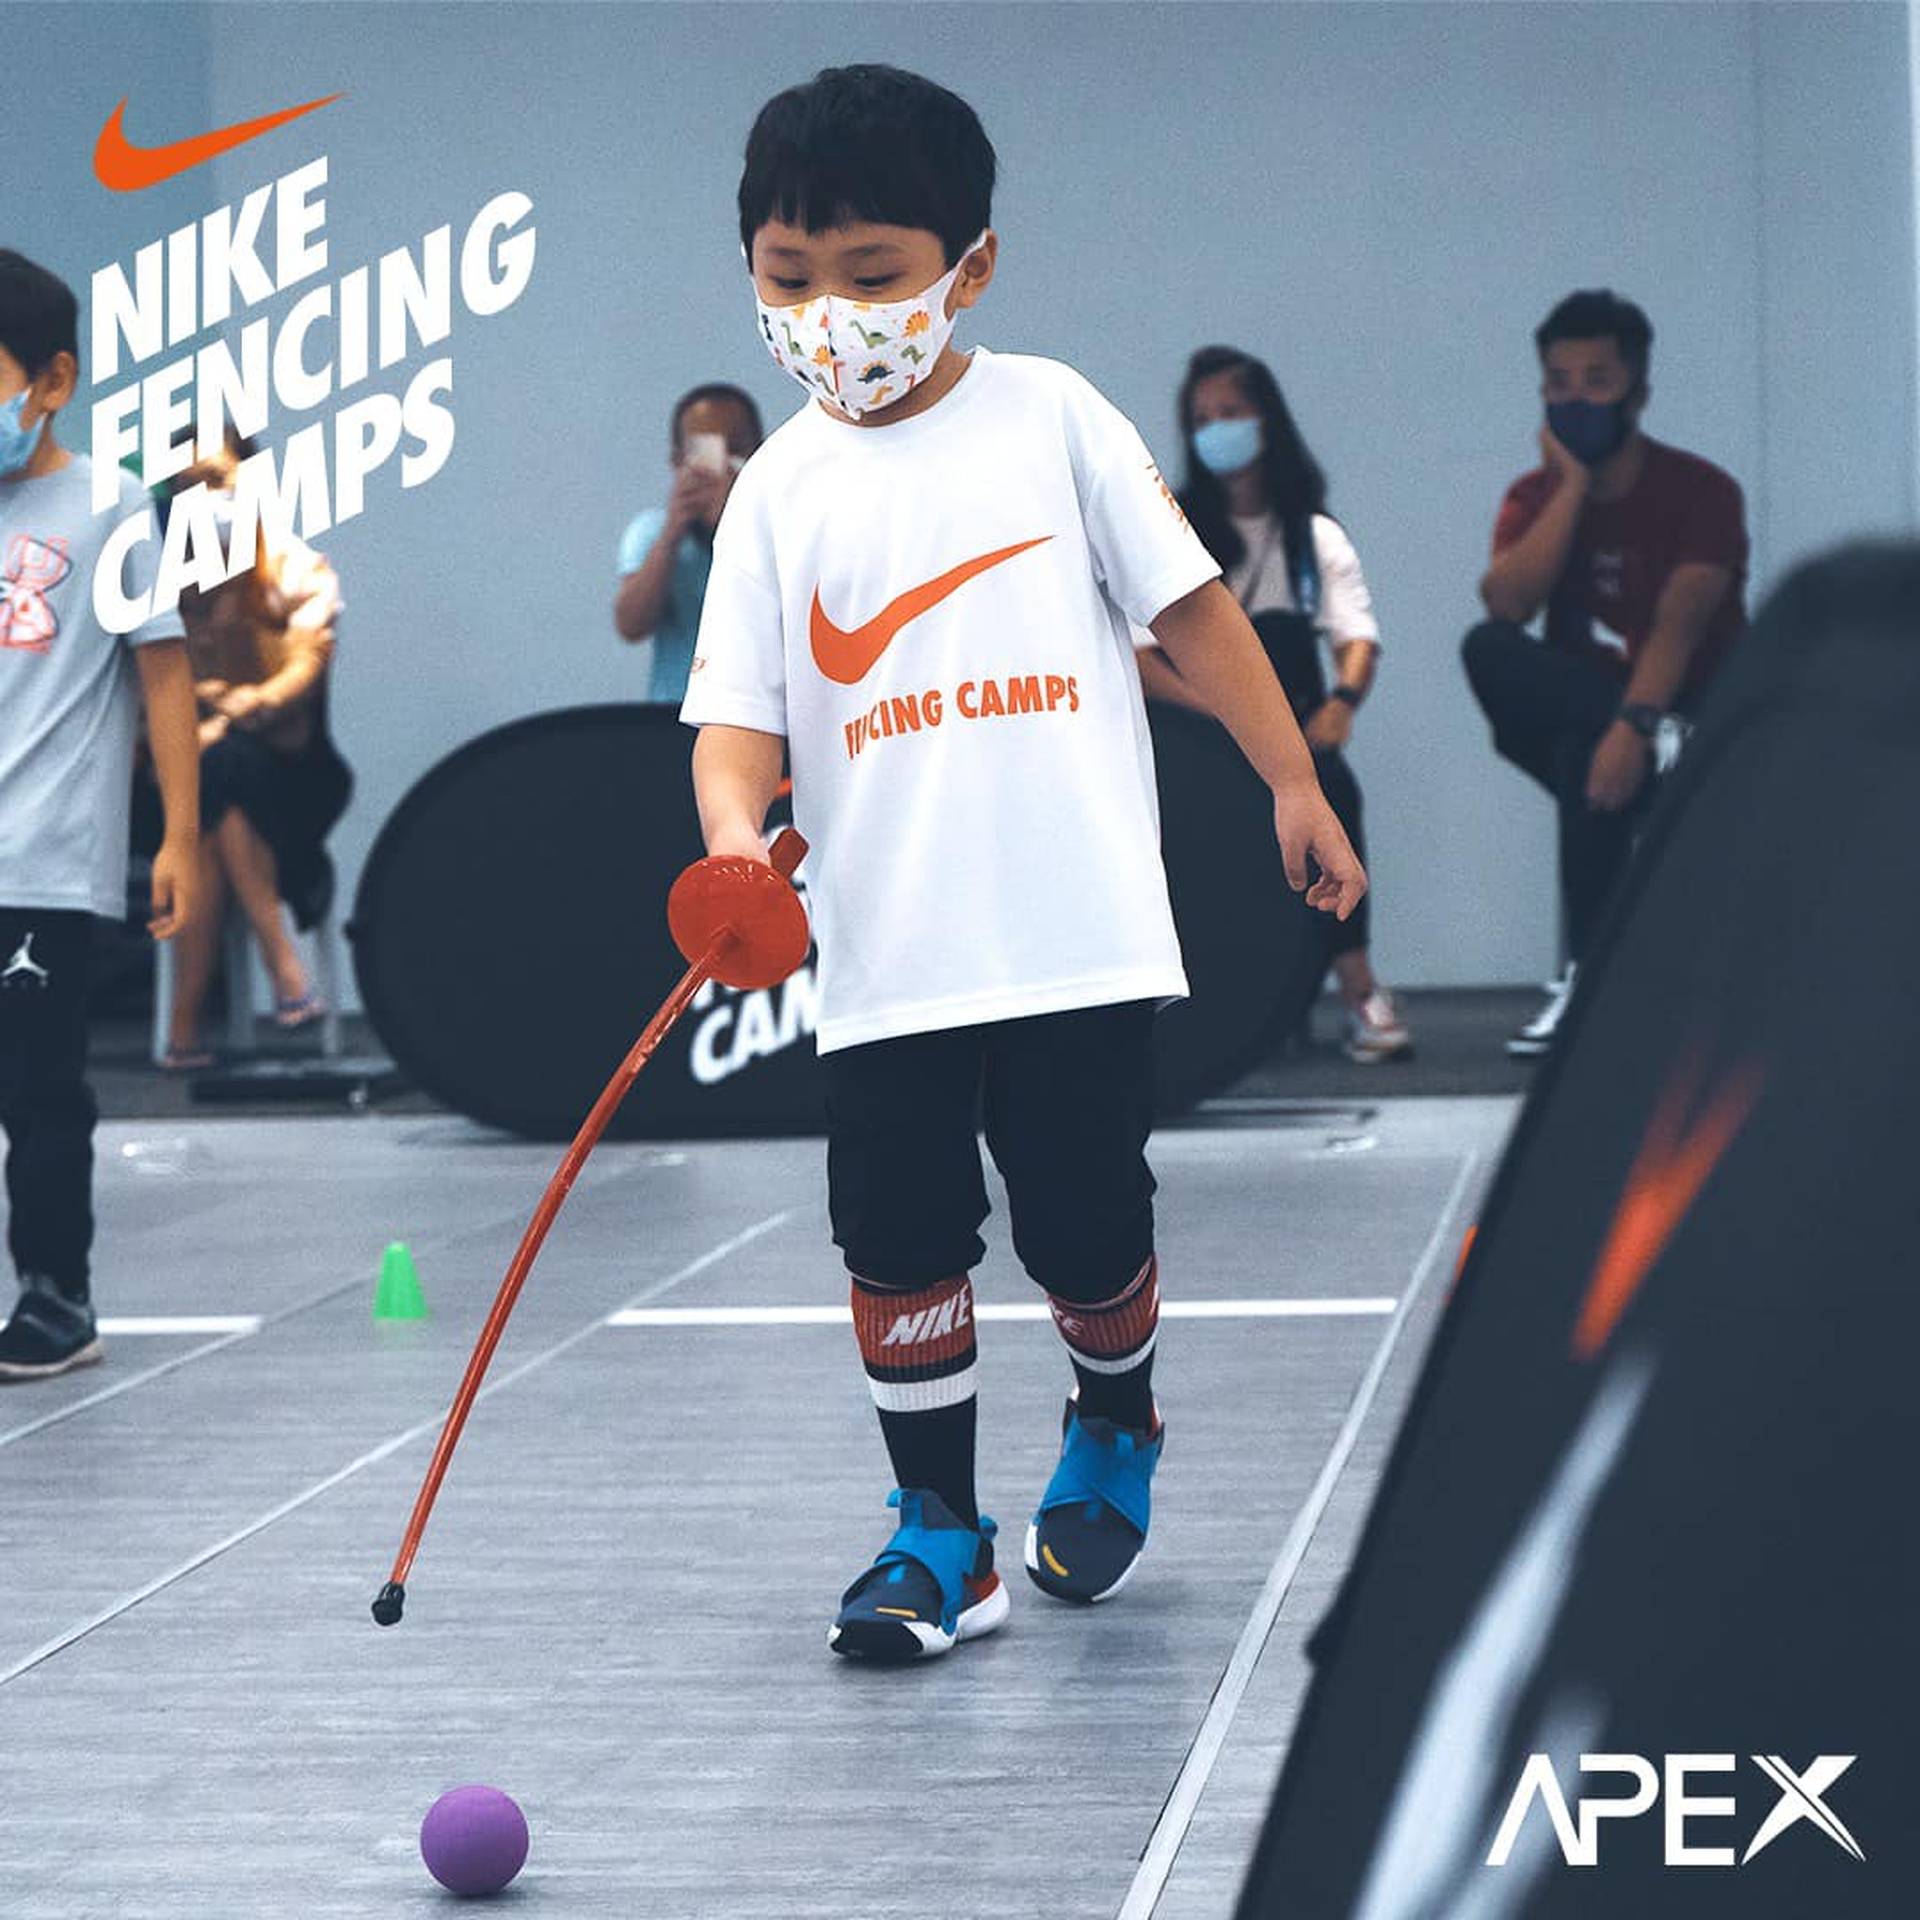 XMAS NIKE Fencing Camp 聖誕Nike劍擊營2022 (4-6歲)